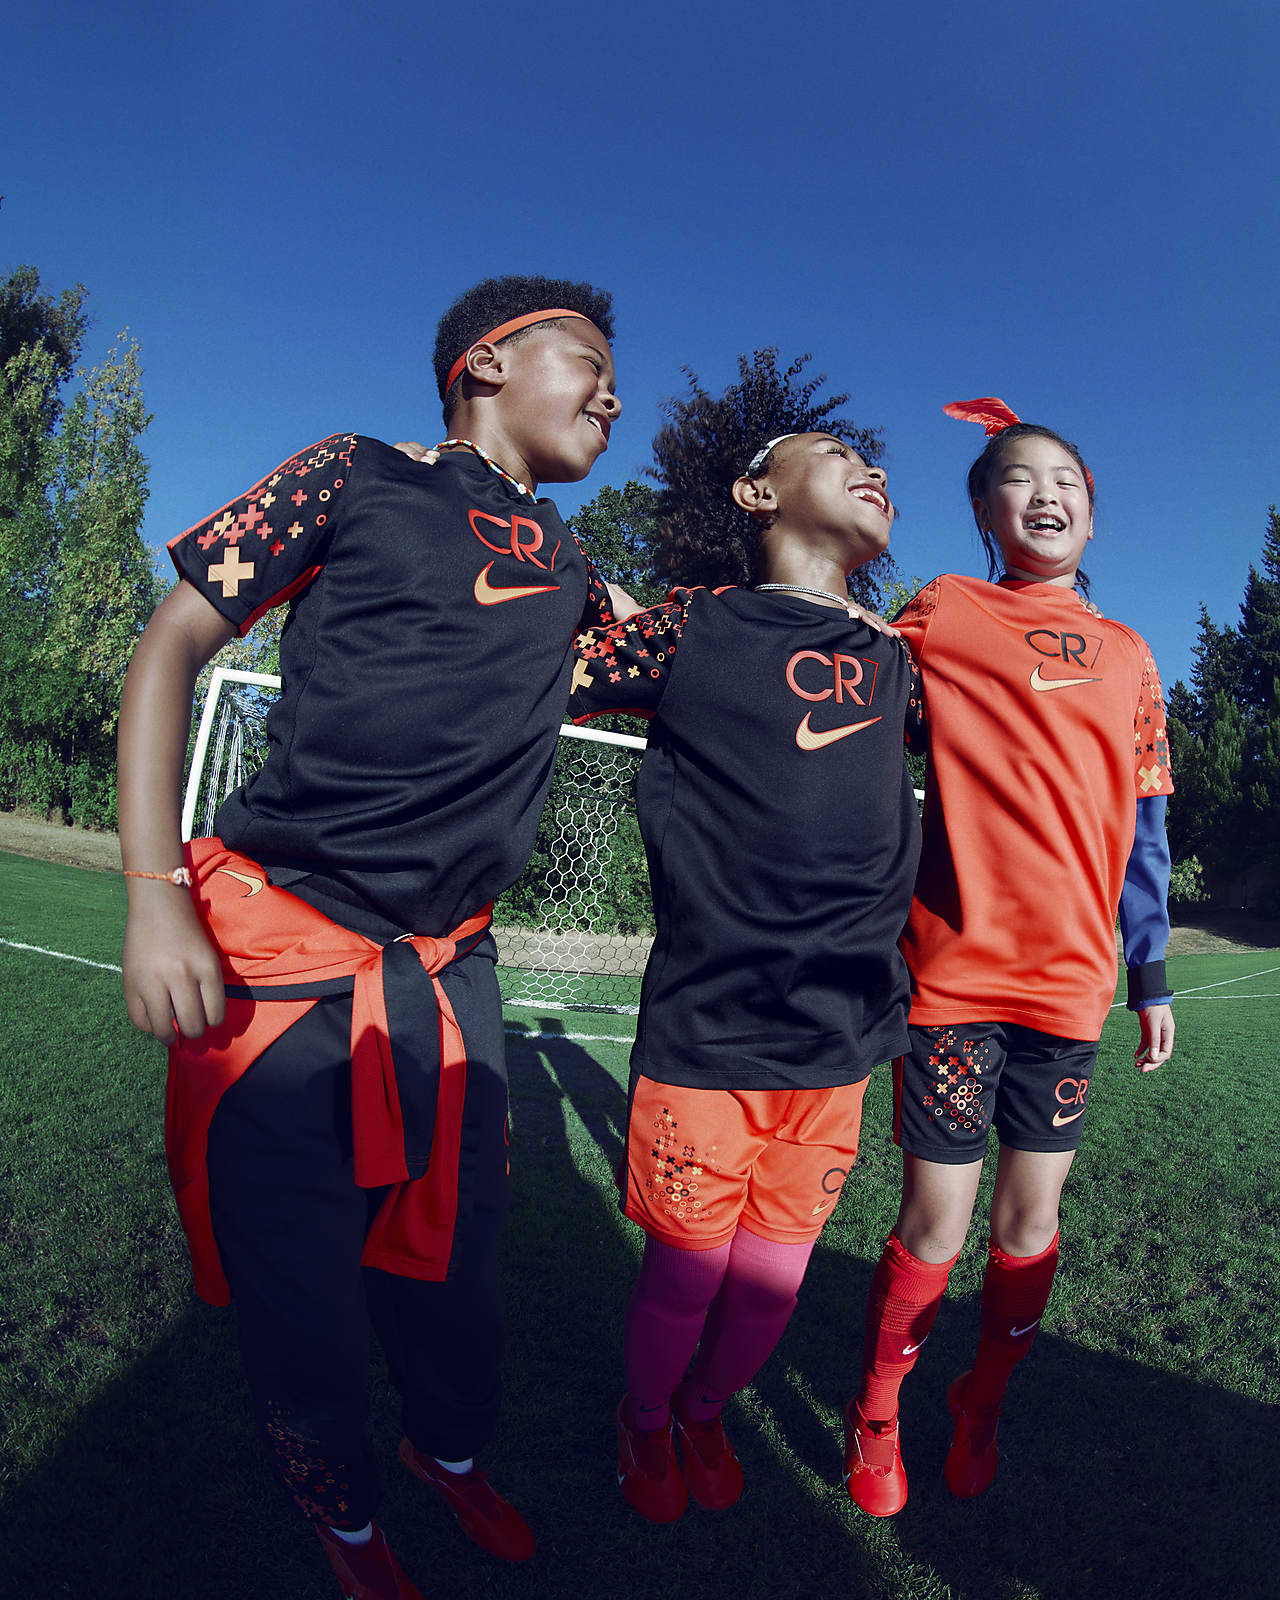 CR7 Big Kids' Short-Sleeve Soccer Top.